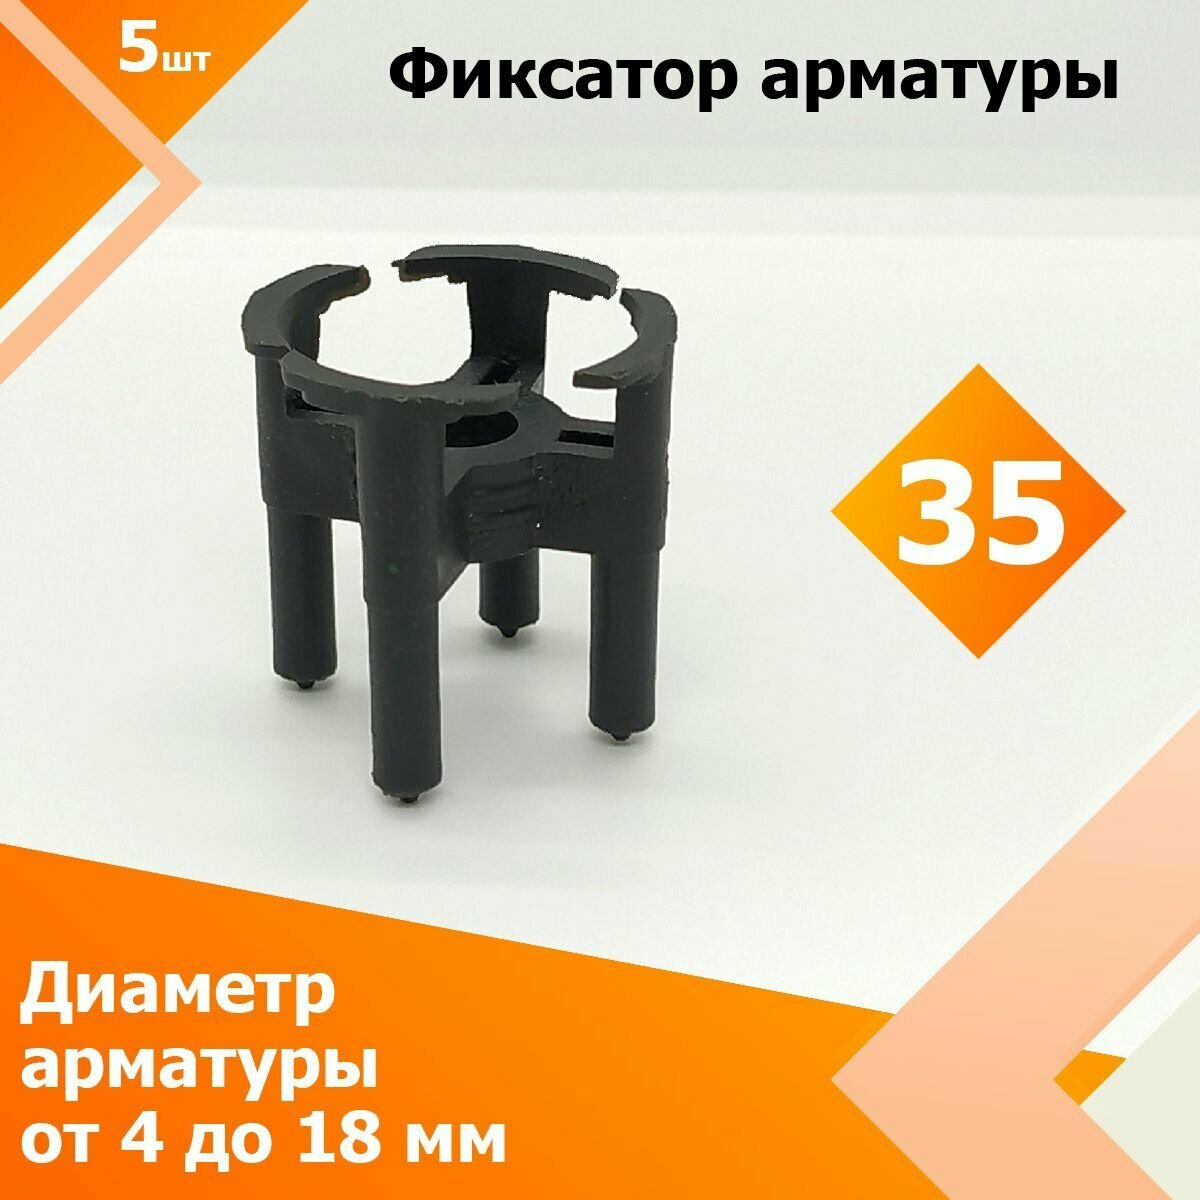 Фиксатор арматуры "Стульчик" 35 мм (5 шт.) (Диаметр арматуры от 4 до 18 мм)